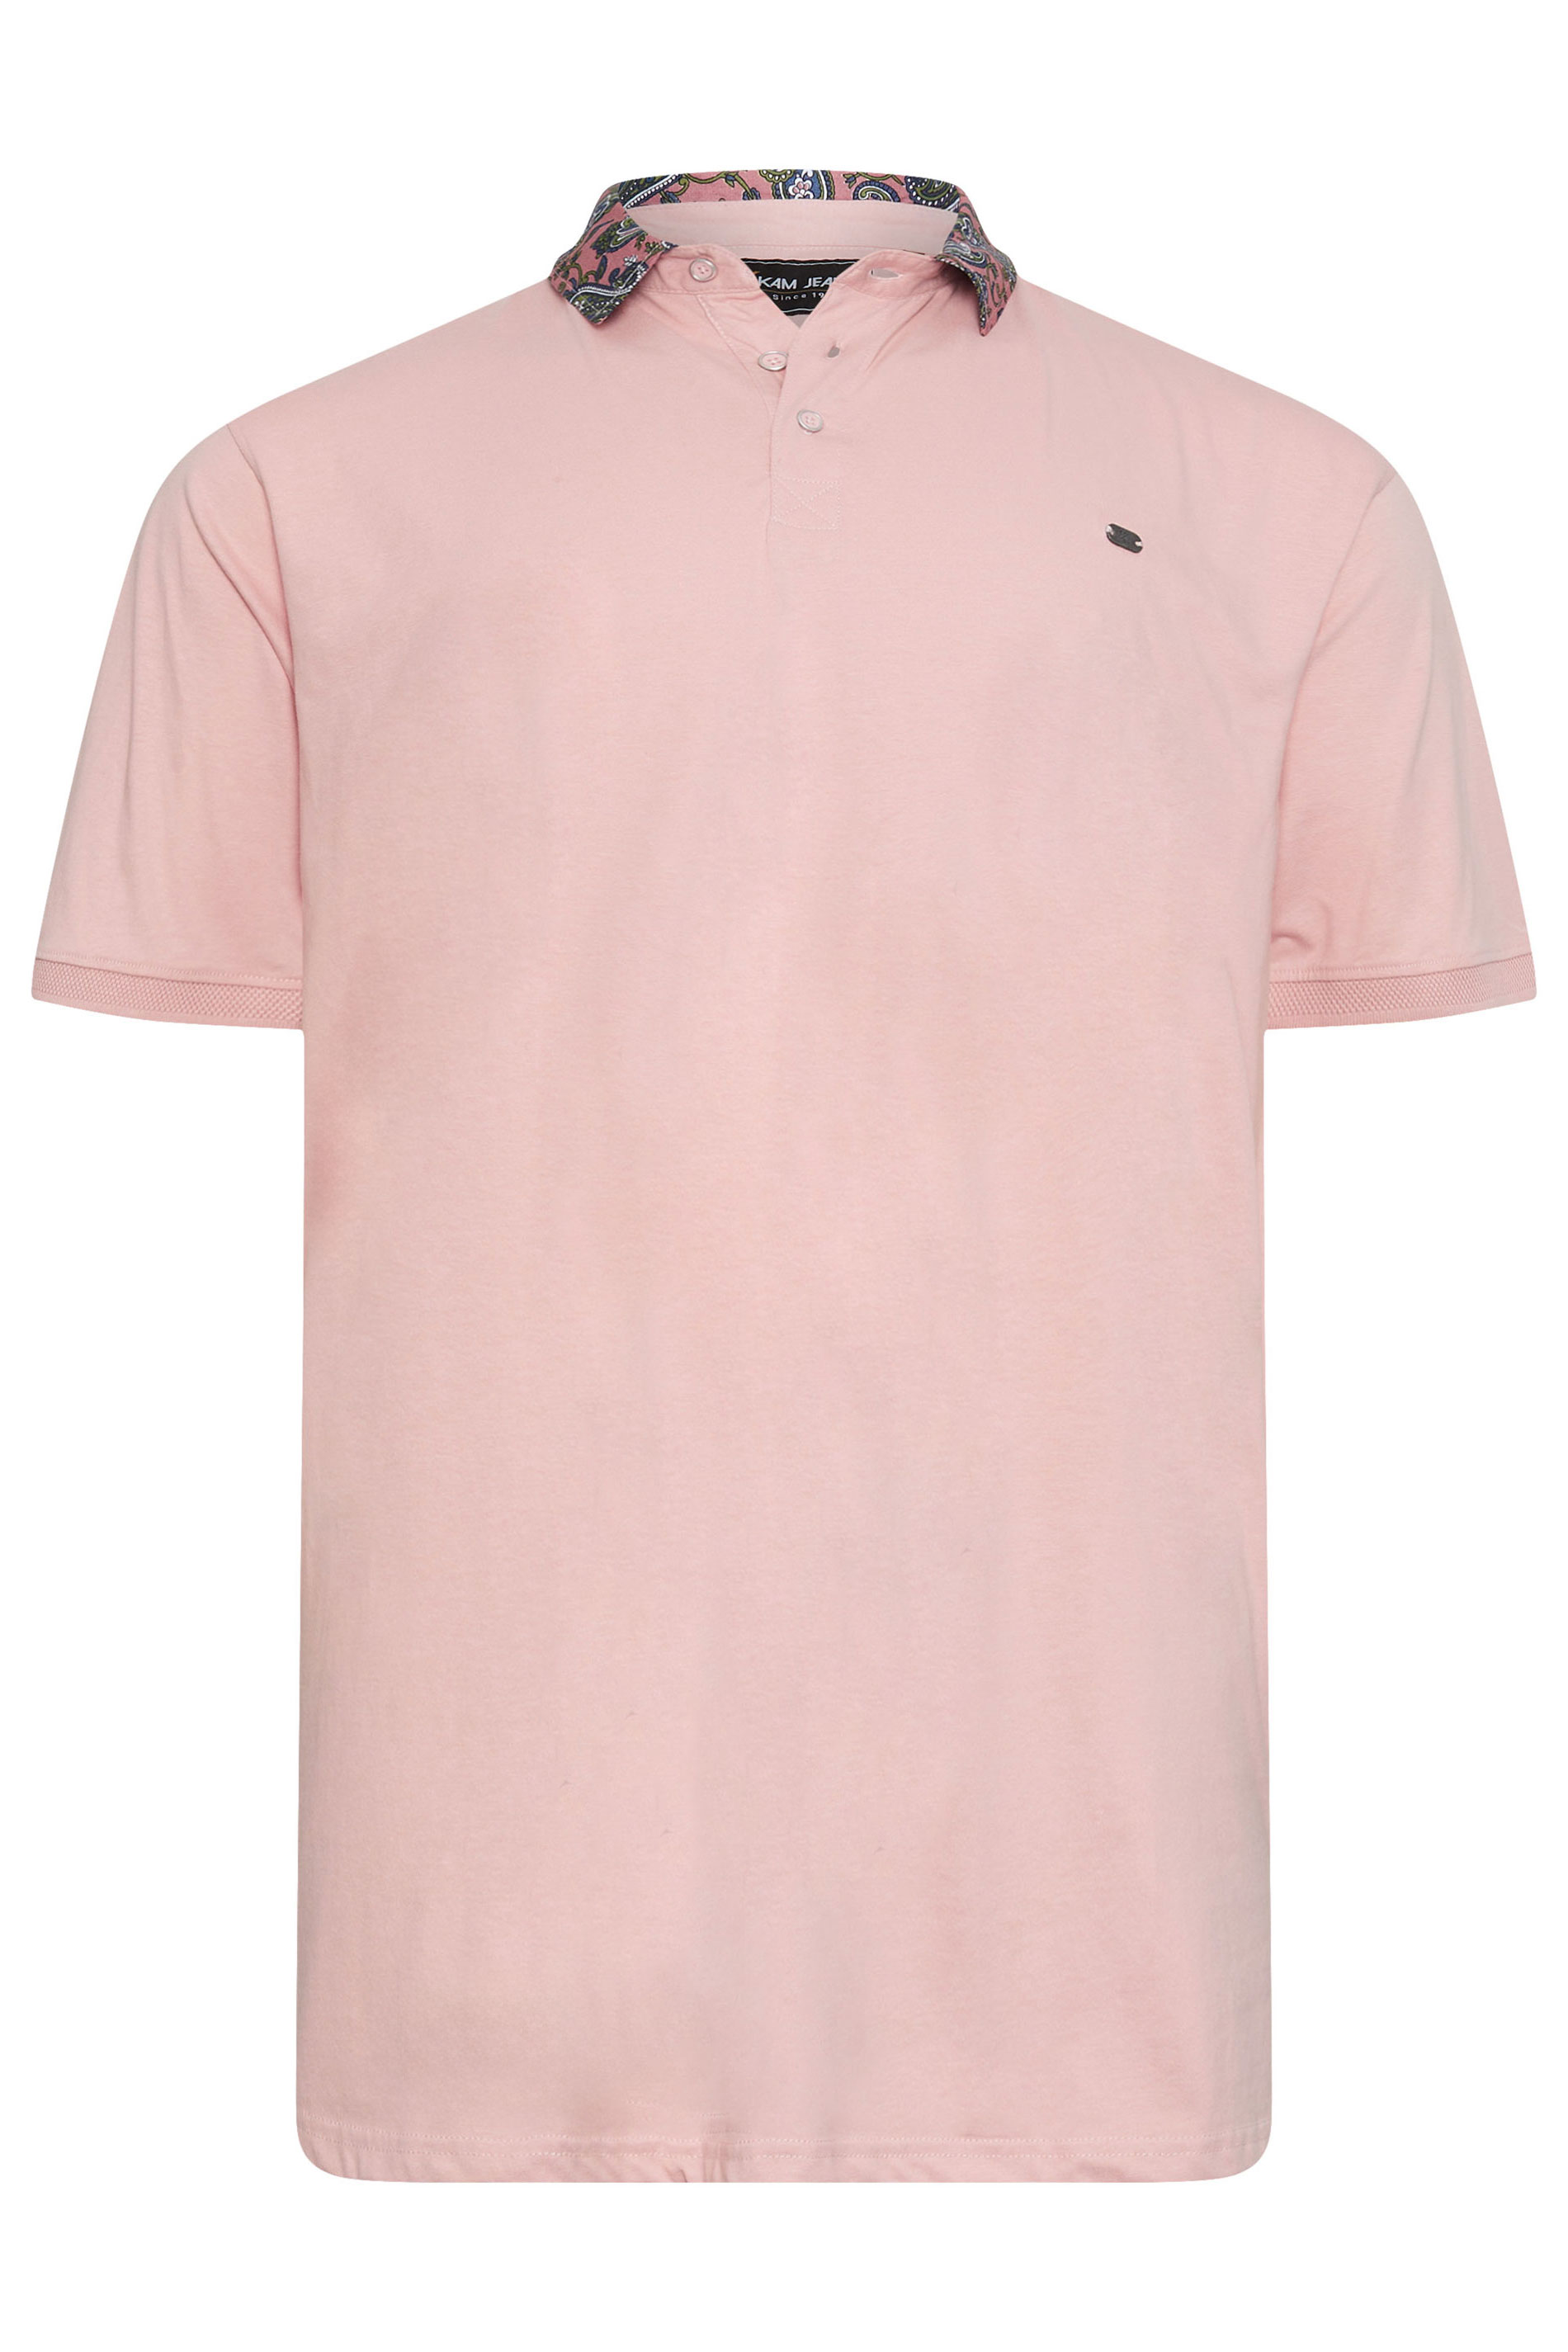 KAM Big & Tall Pink Jersey Floral Collar Polo Shirt | BadRhino 2